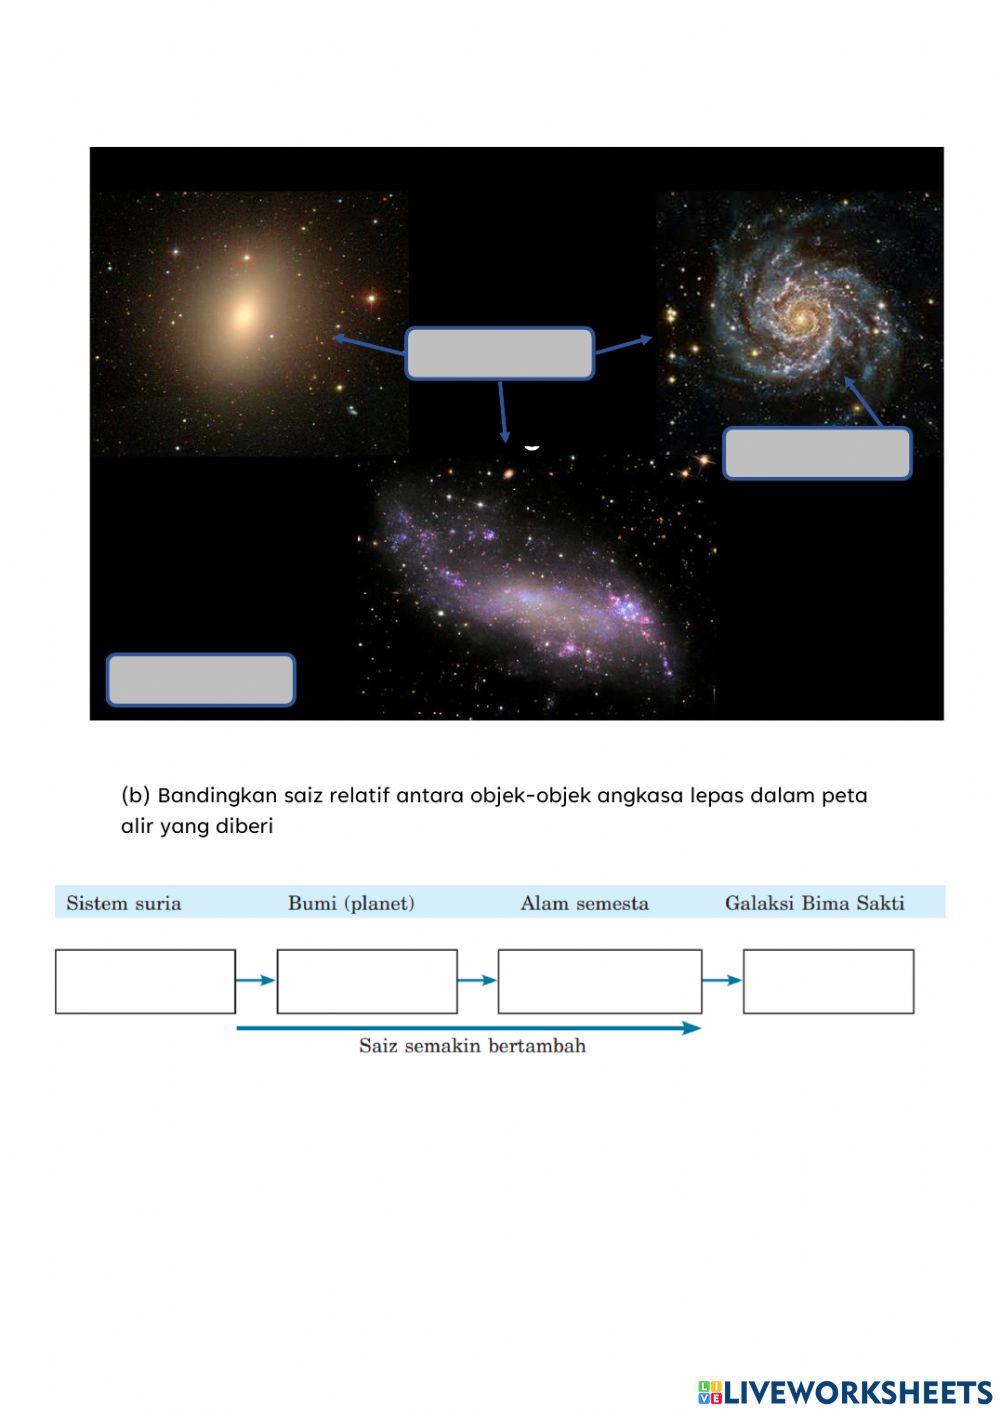 11.1 Bintang dan galaksi dalam alam semesta